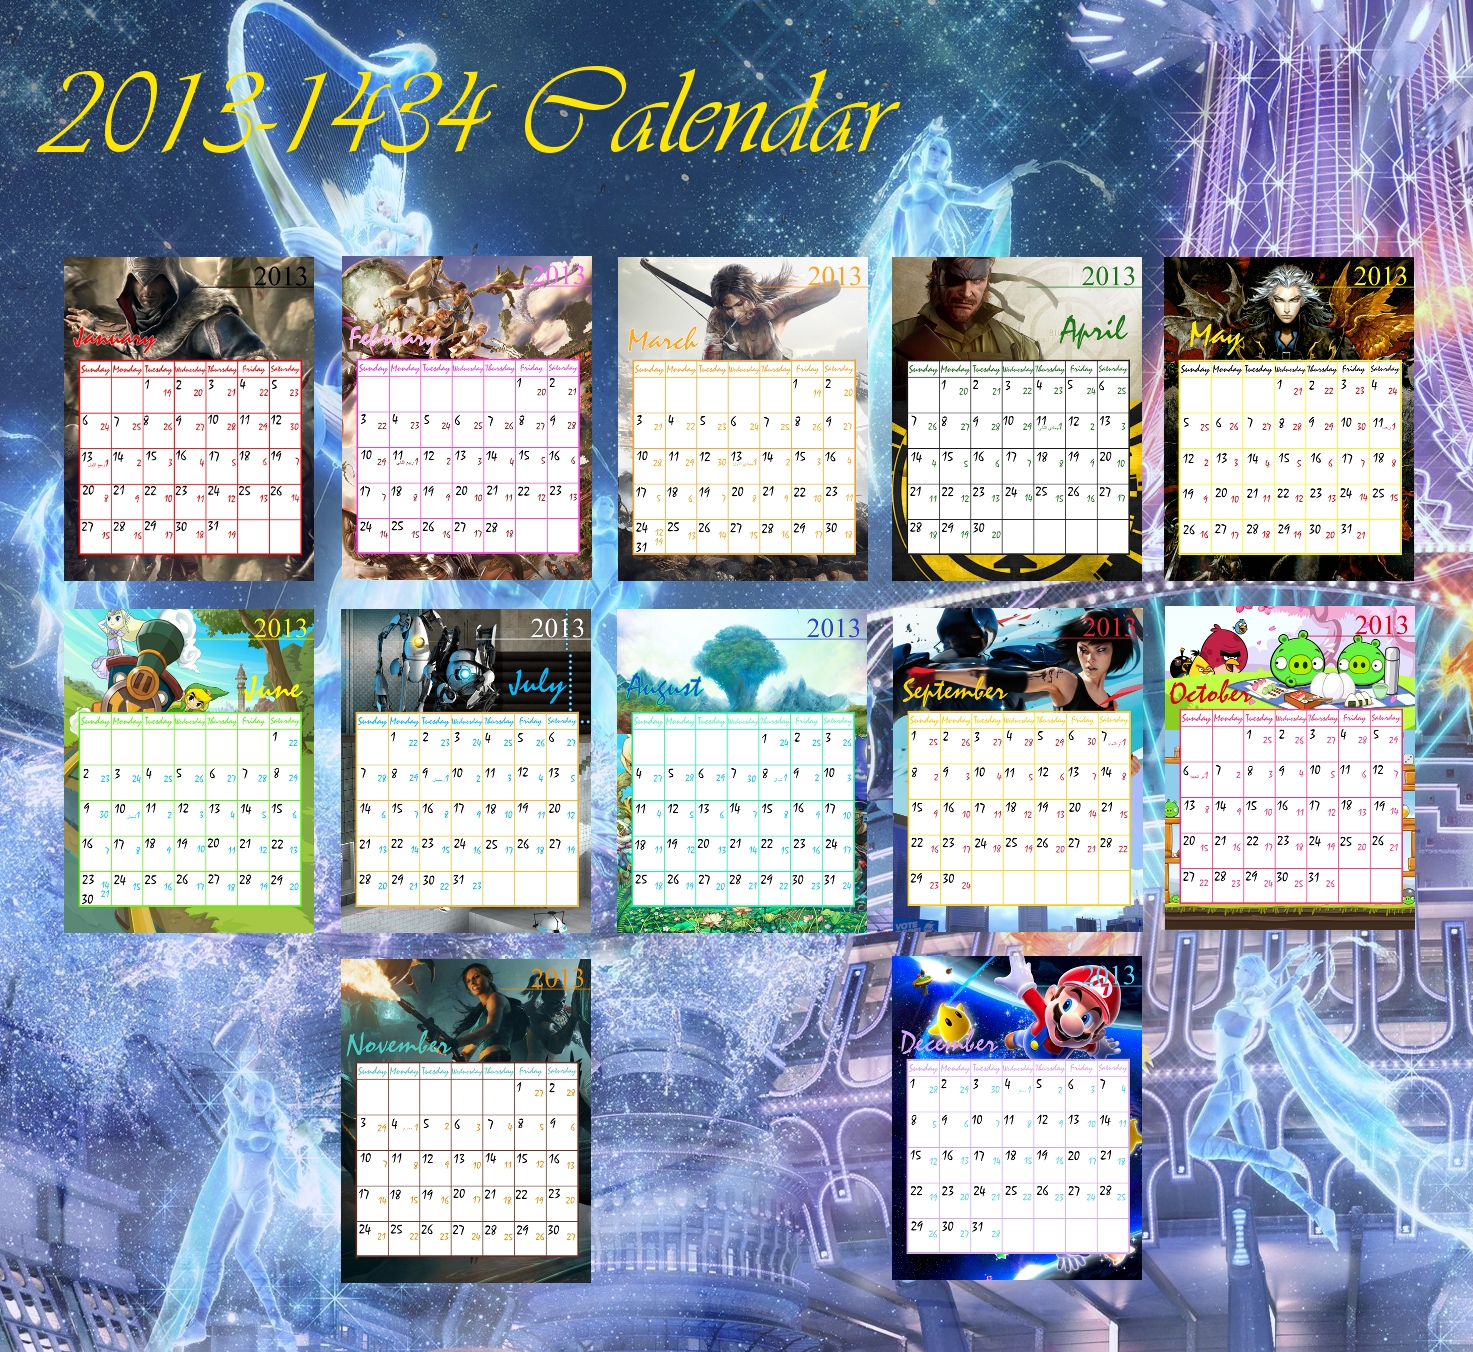 2013-1434-videogames-calendar-by-kd1only-on-deviantart